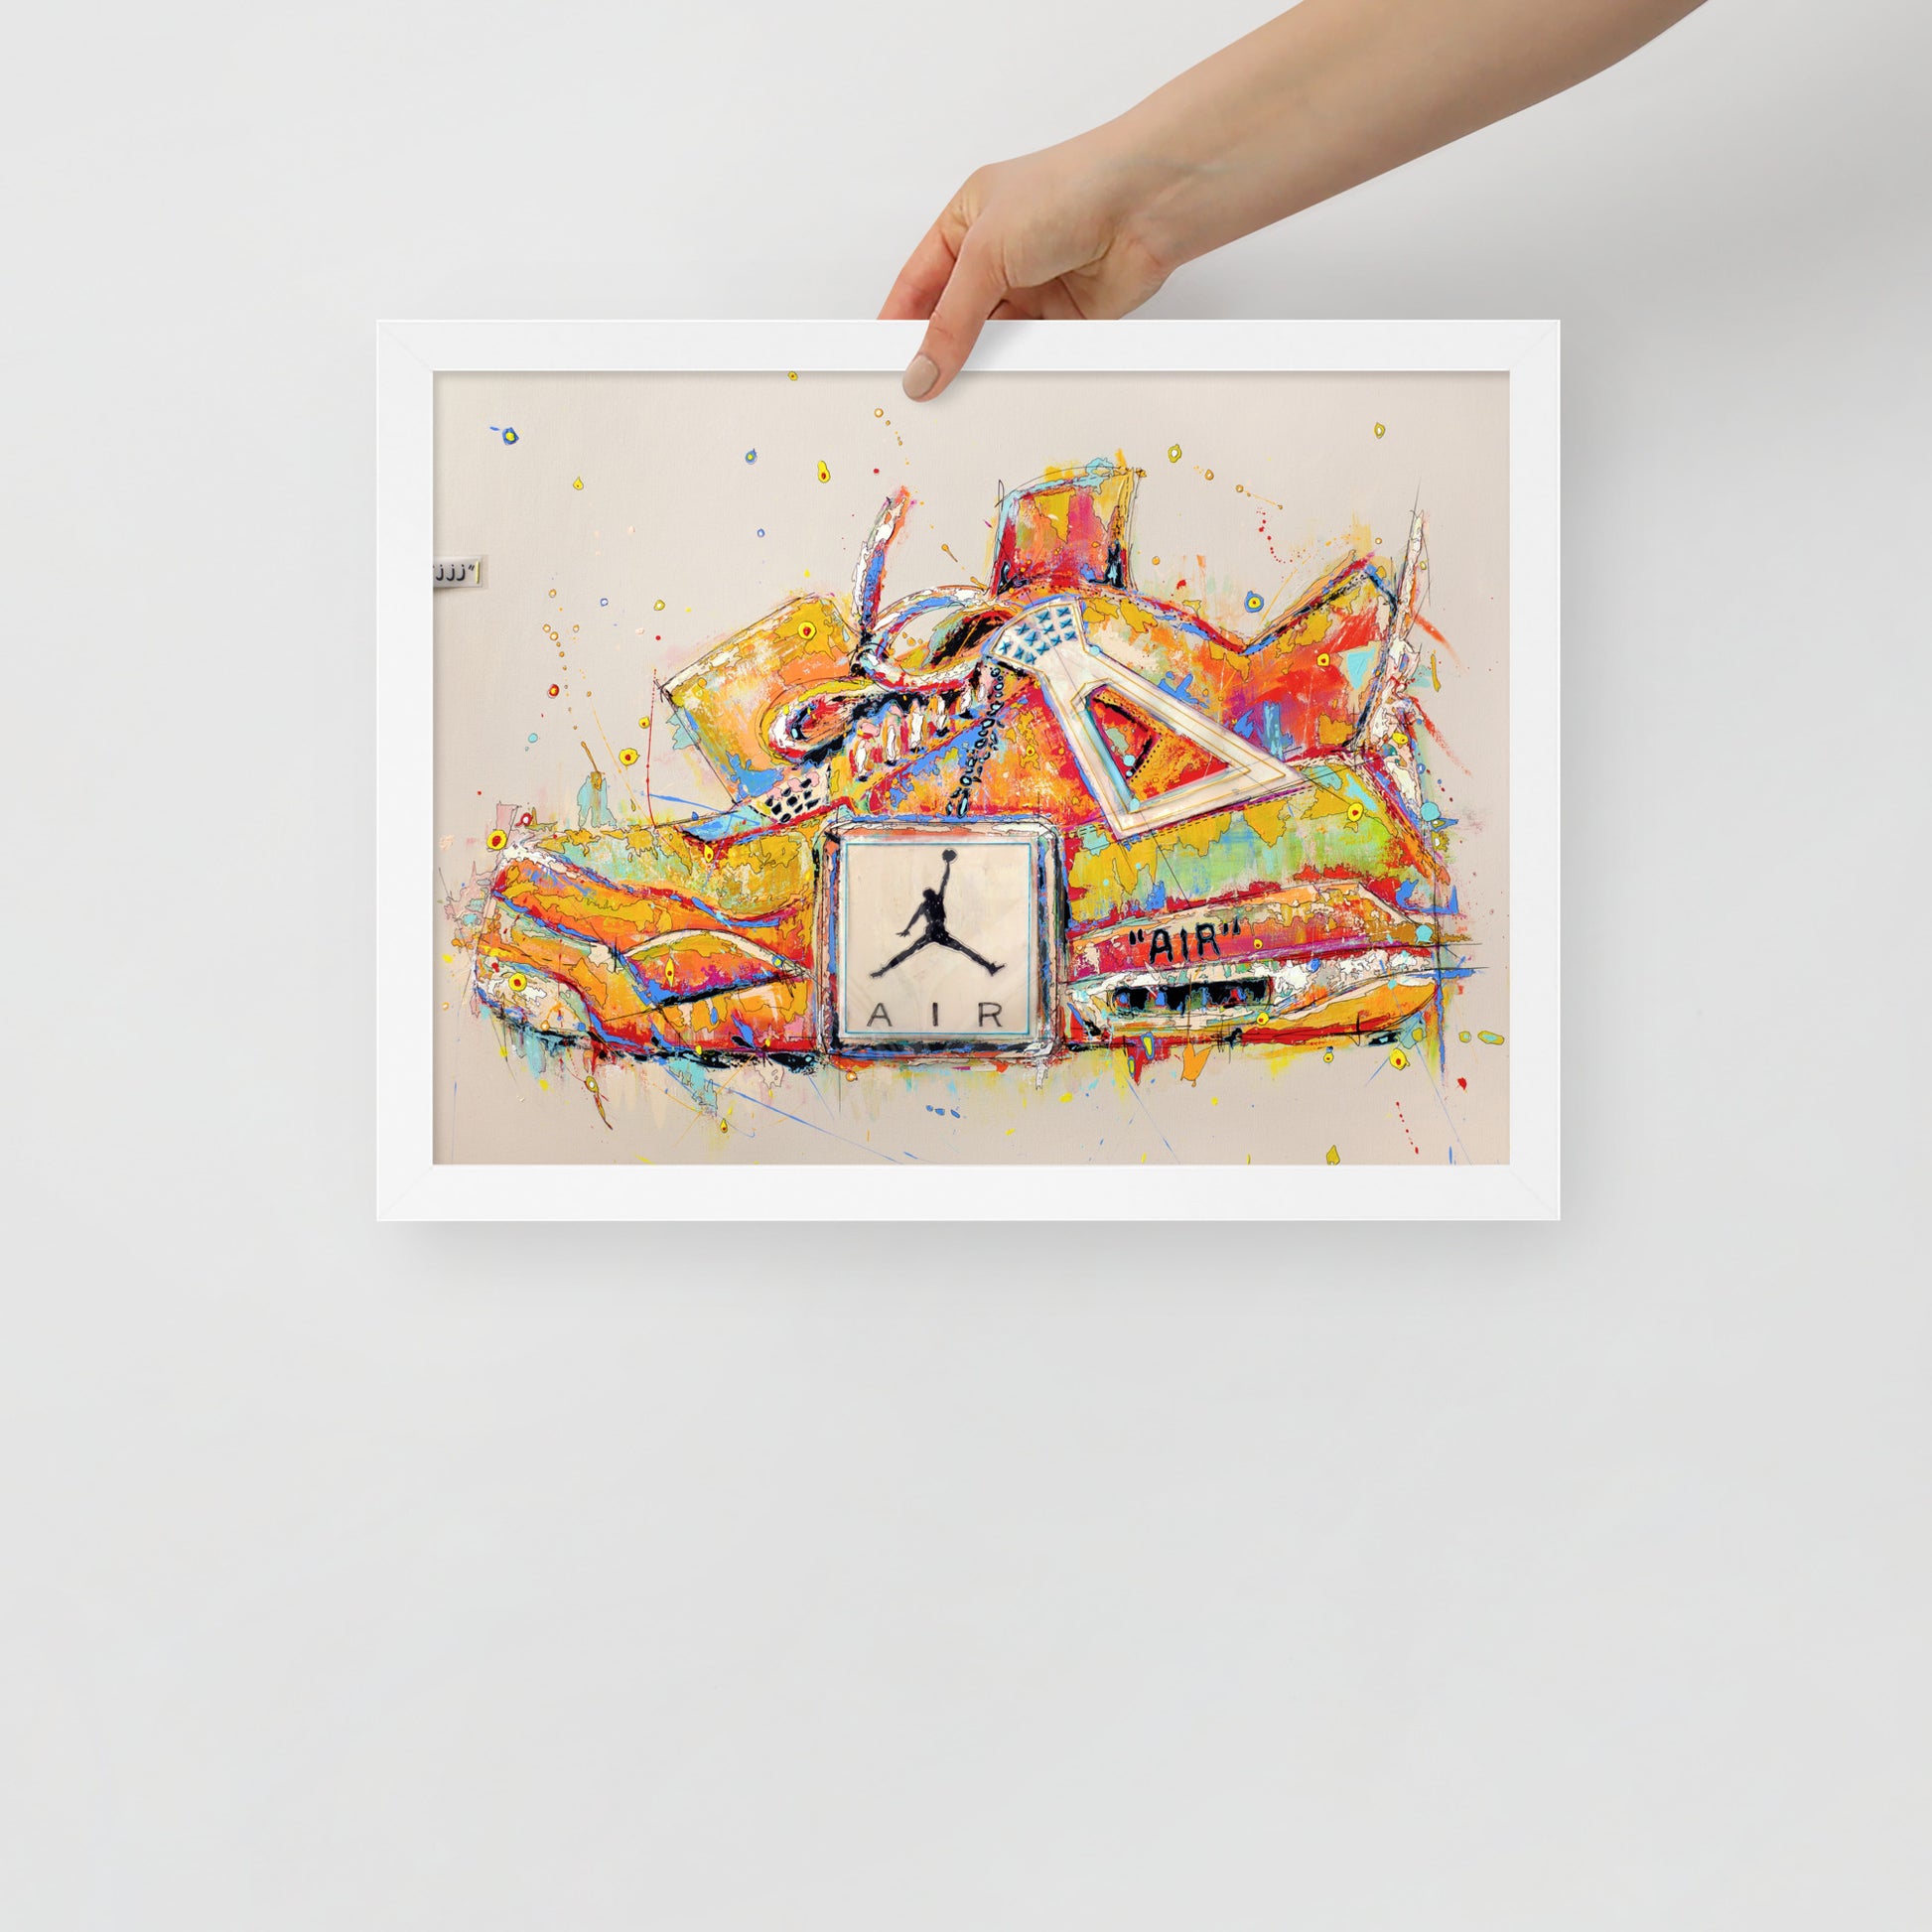  "Fine art framed print on matte paper of Air Jordan "Sail" painting | Emerging contemporary artist Kate Jensen | Katejjj.shop"